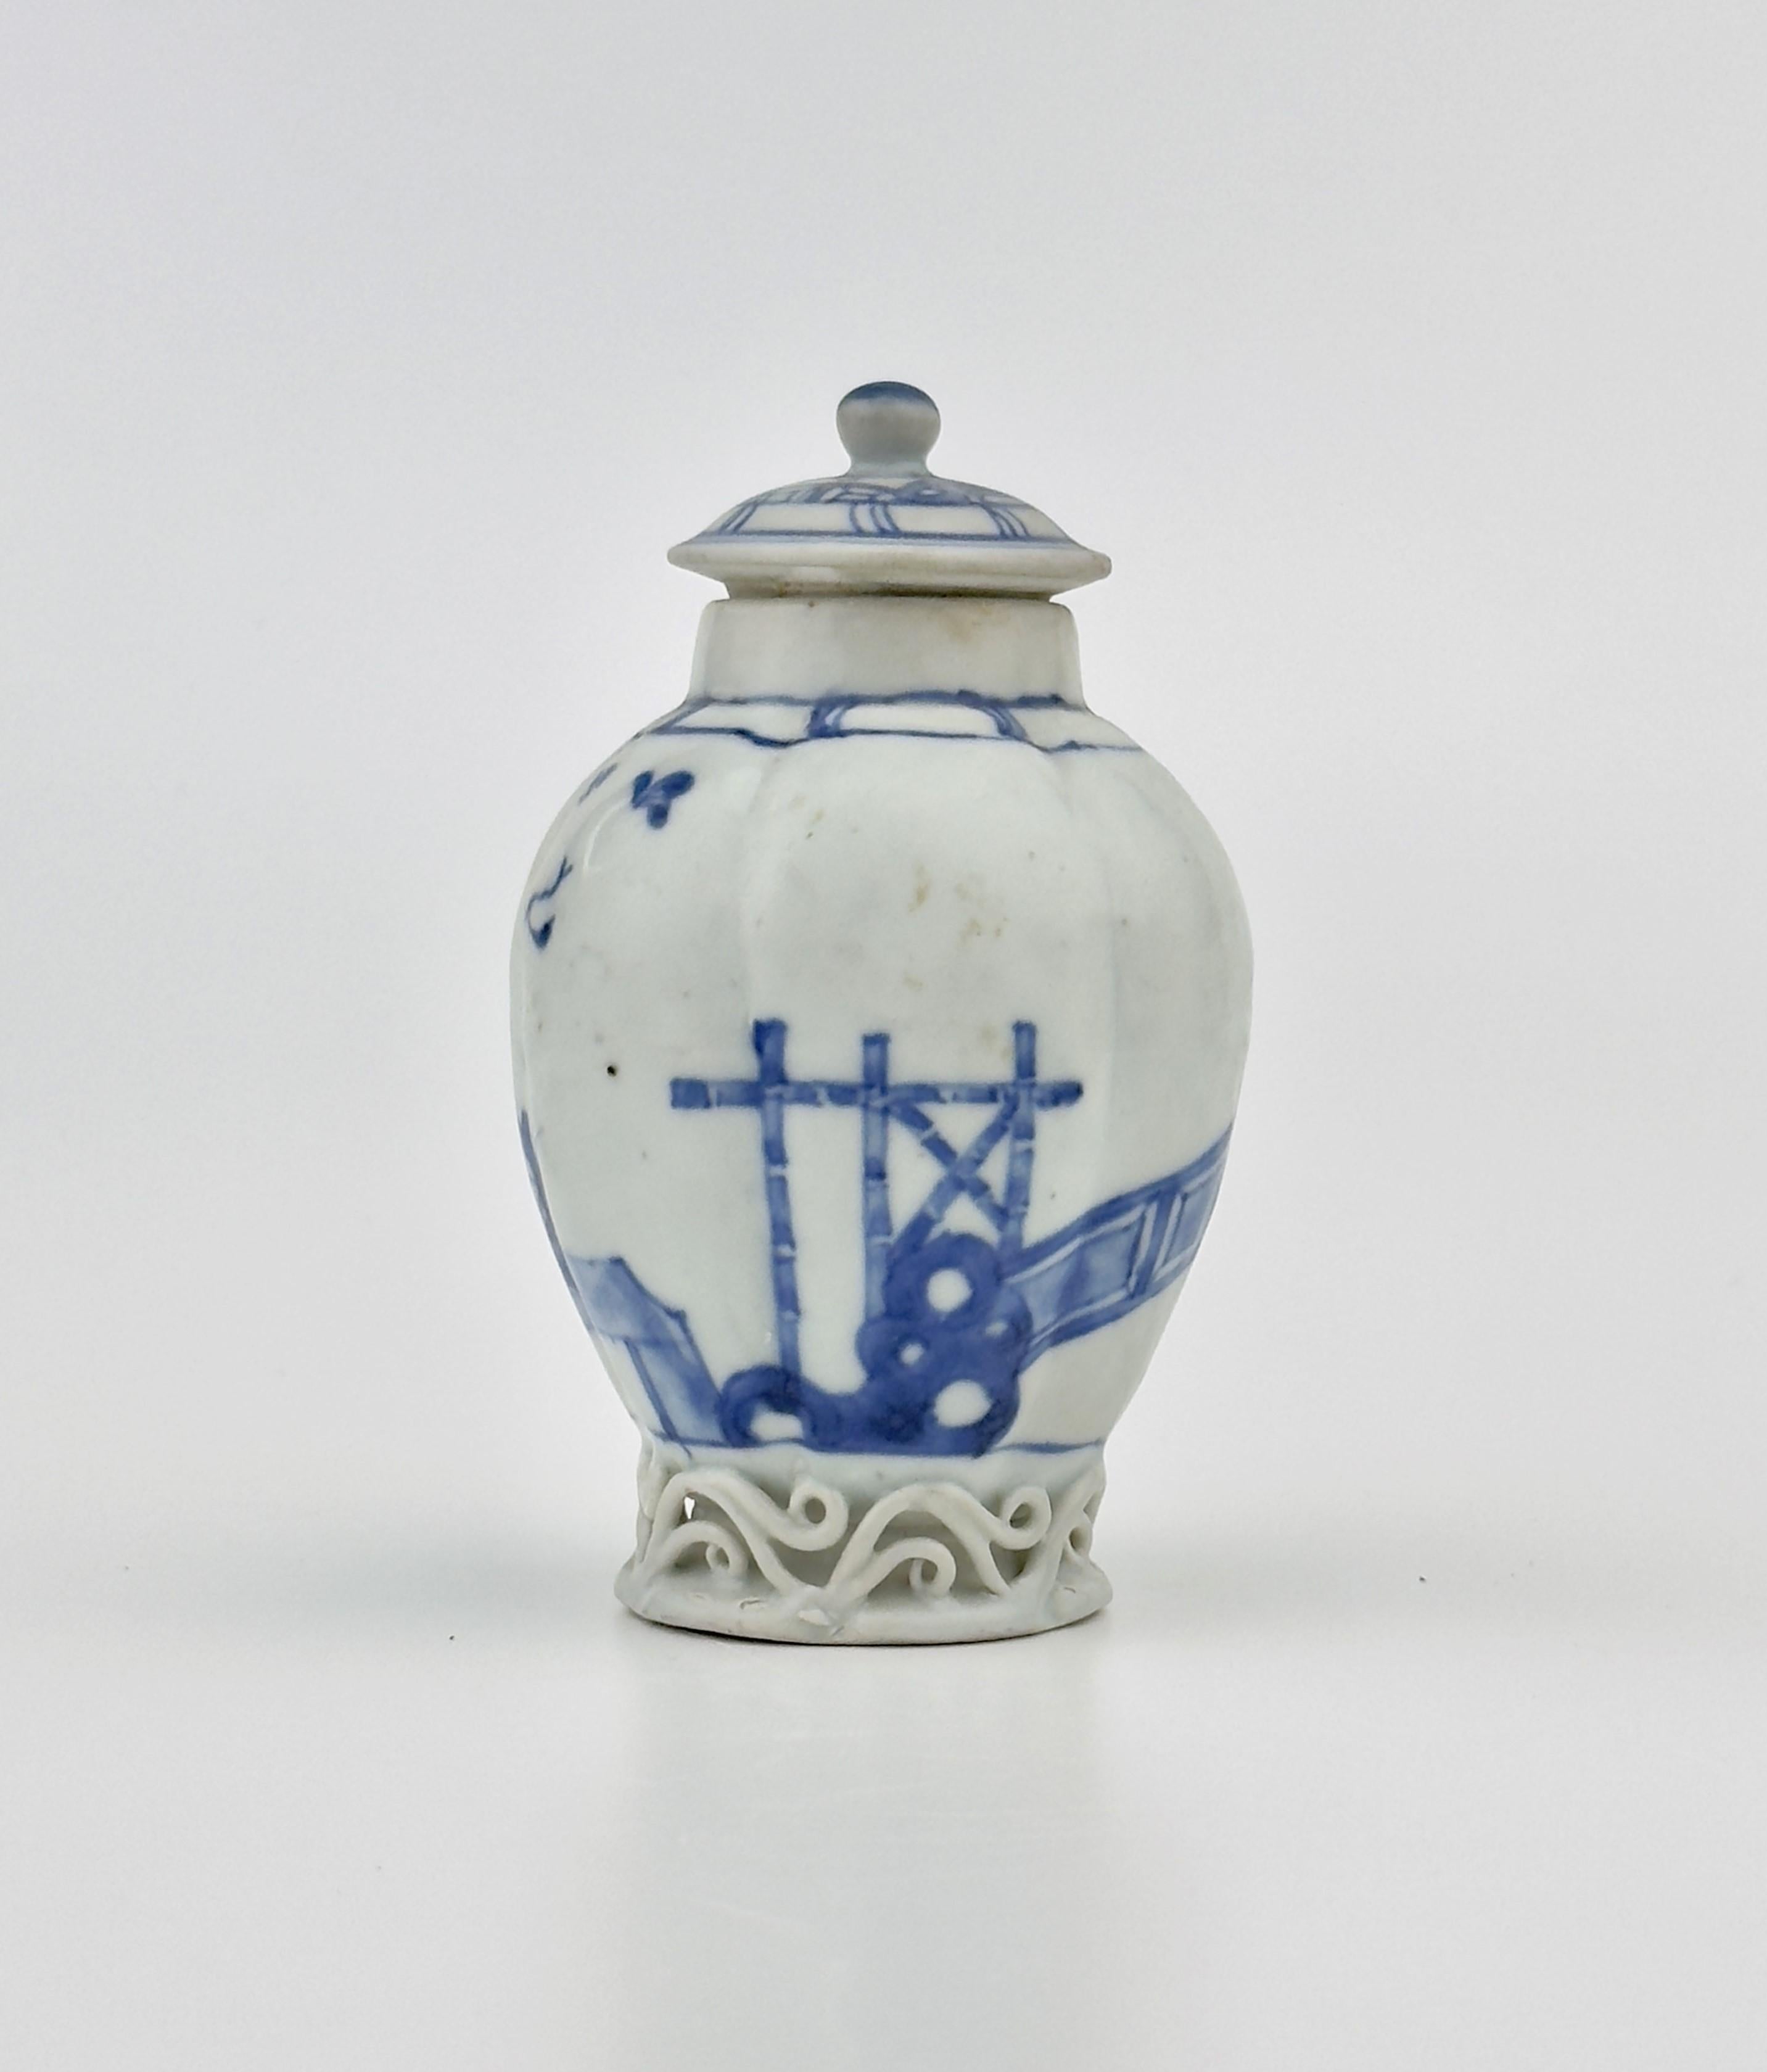 Chinoiserie 'Imari Pavilion' Pattern Blue and White Jar c. 1725, Qing Dynasty, Yongzheng Era For Sale